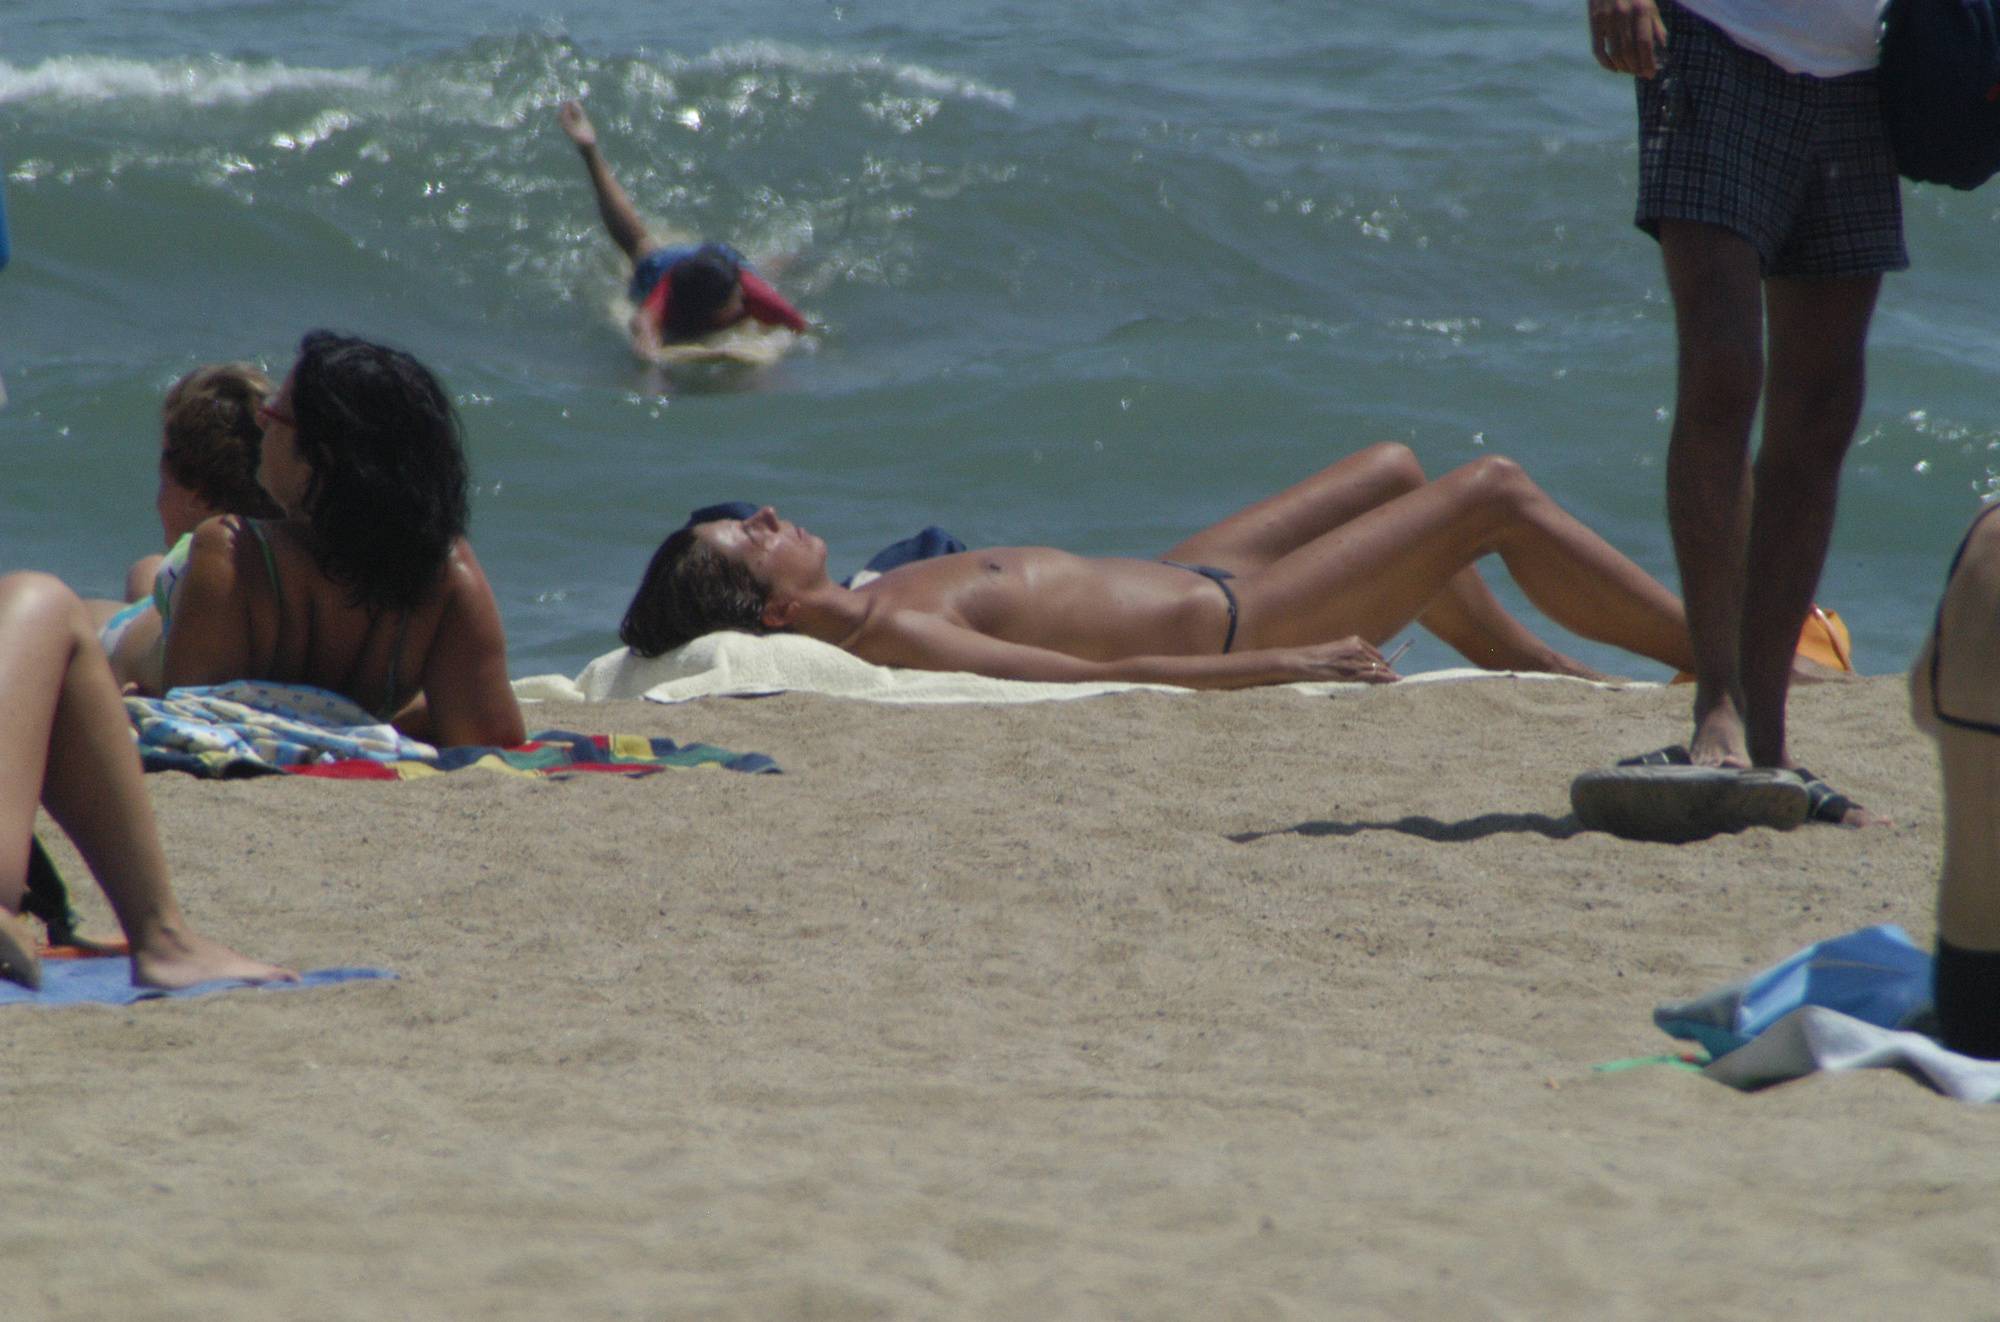 Barcelona Topless Beach - 1